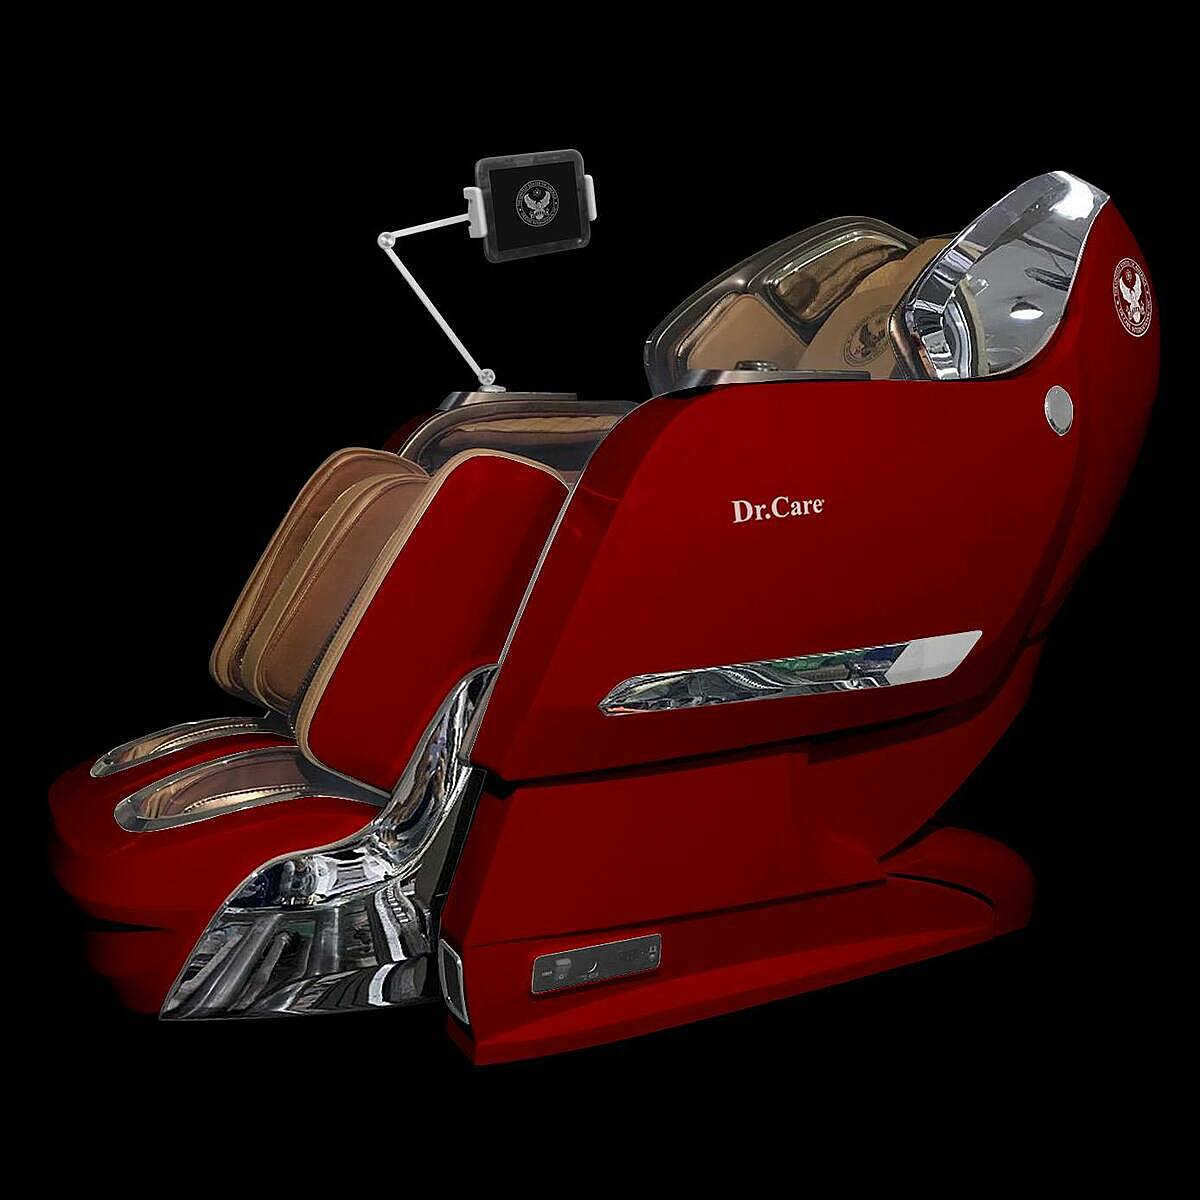 Thiết kế của ghế massage Xreal DR-XR 929S. (Nguồn: Internet)